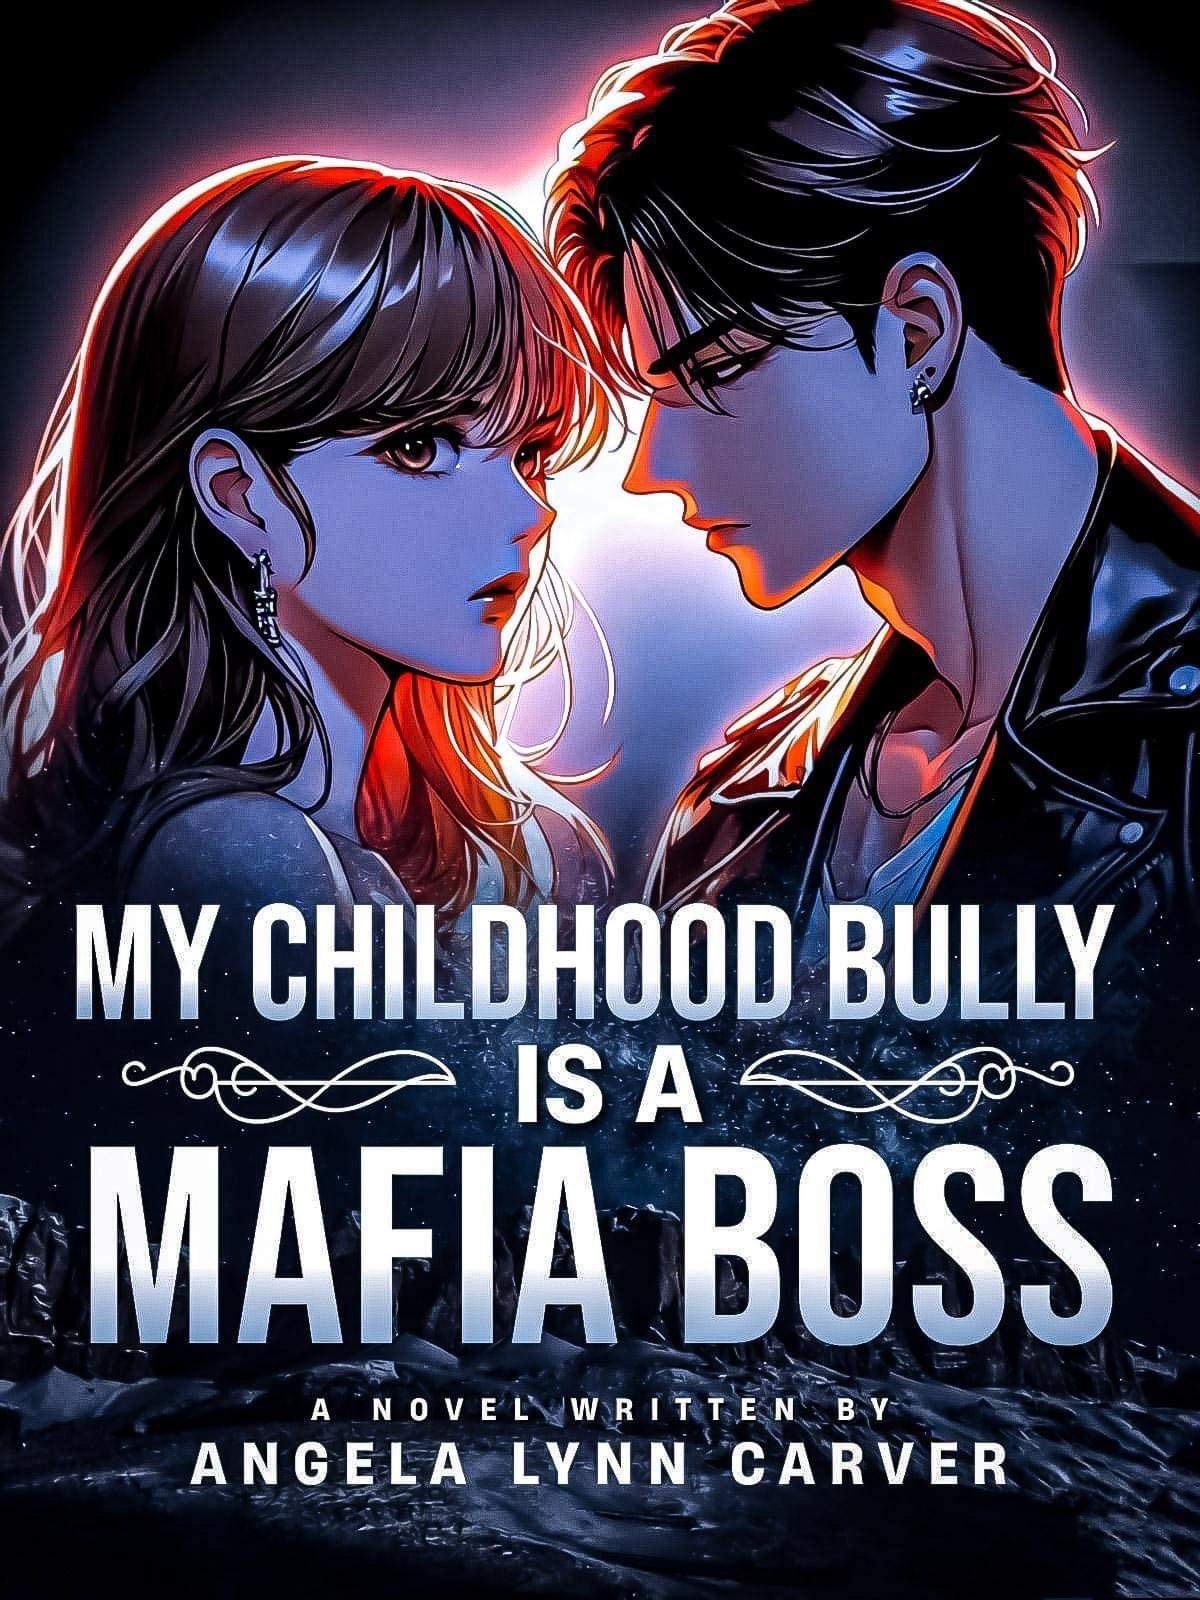 My Childhood Bully is a Mafia Boss Book